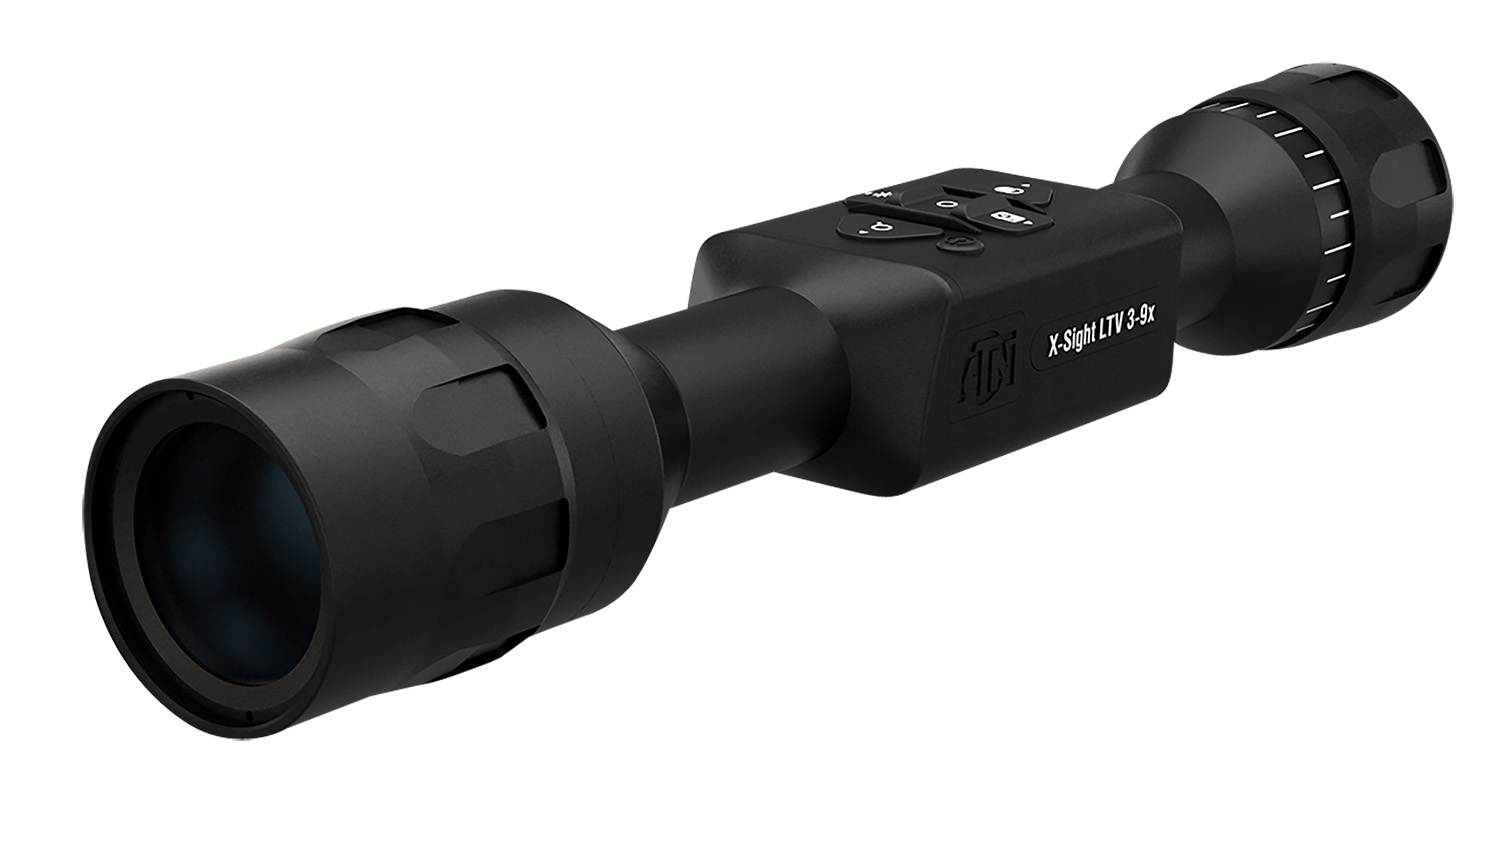 ATN TIWSTLTV319X Thor LTV  Thermal Rifle Scope Black 3-9x19mm Illuminated Multi Reticle 320x240 Resolution